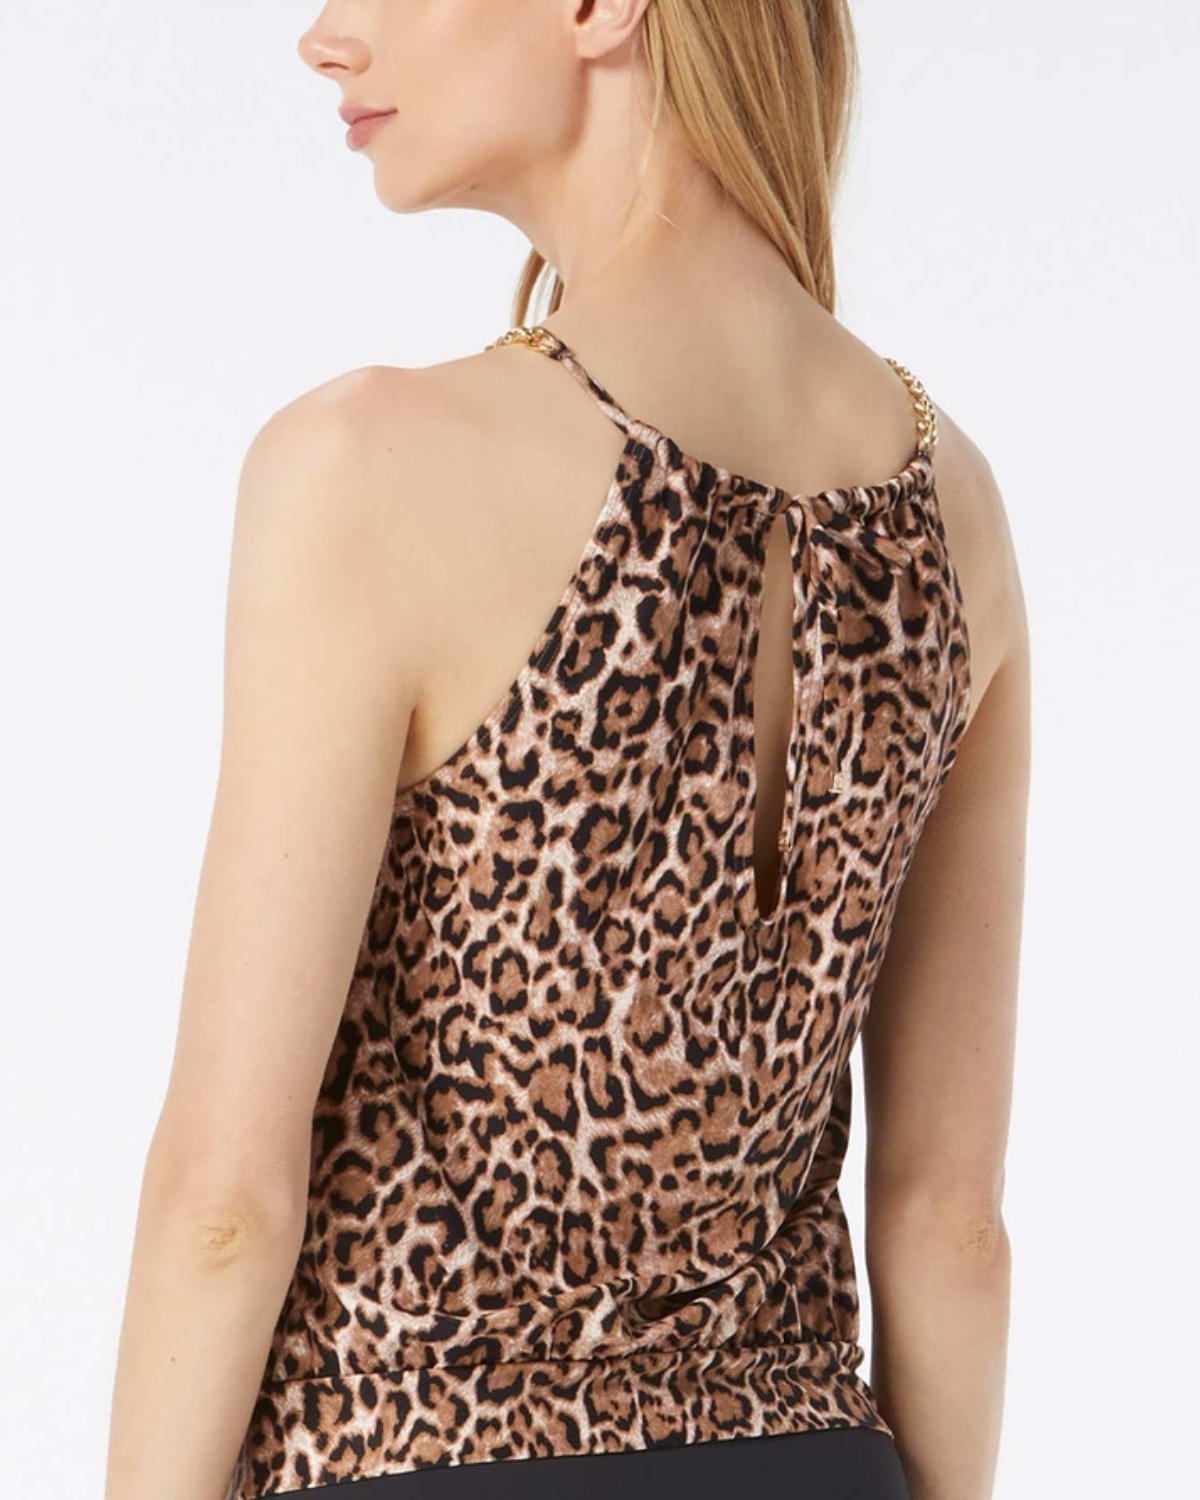 Model wearing a high neck blouson tankini top in a cheetah print